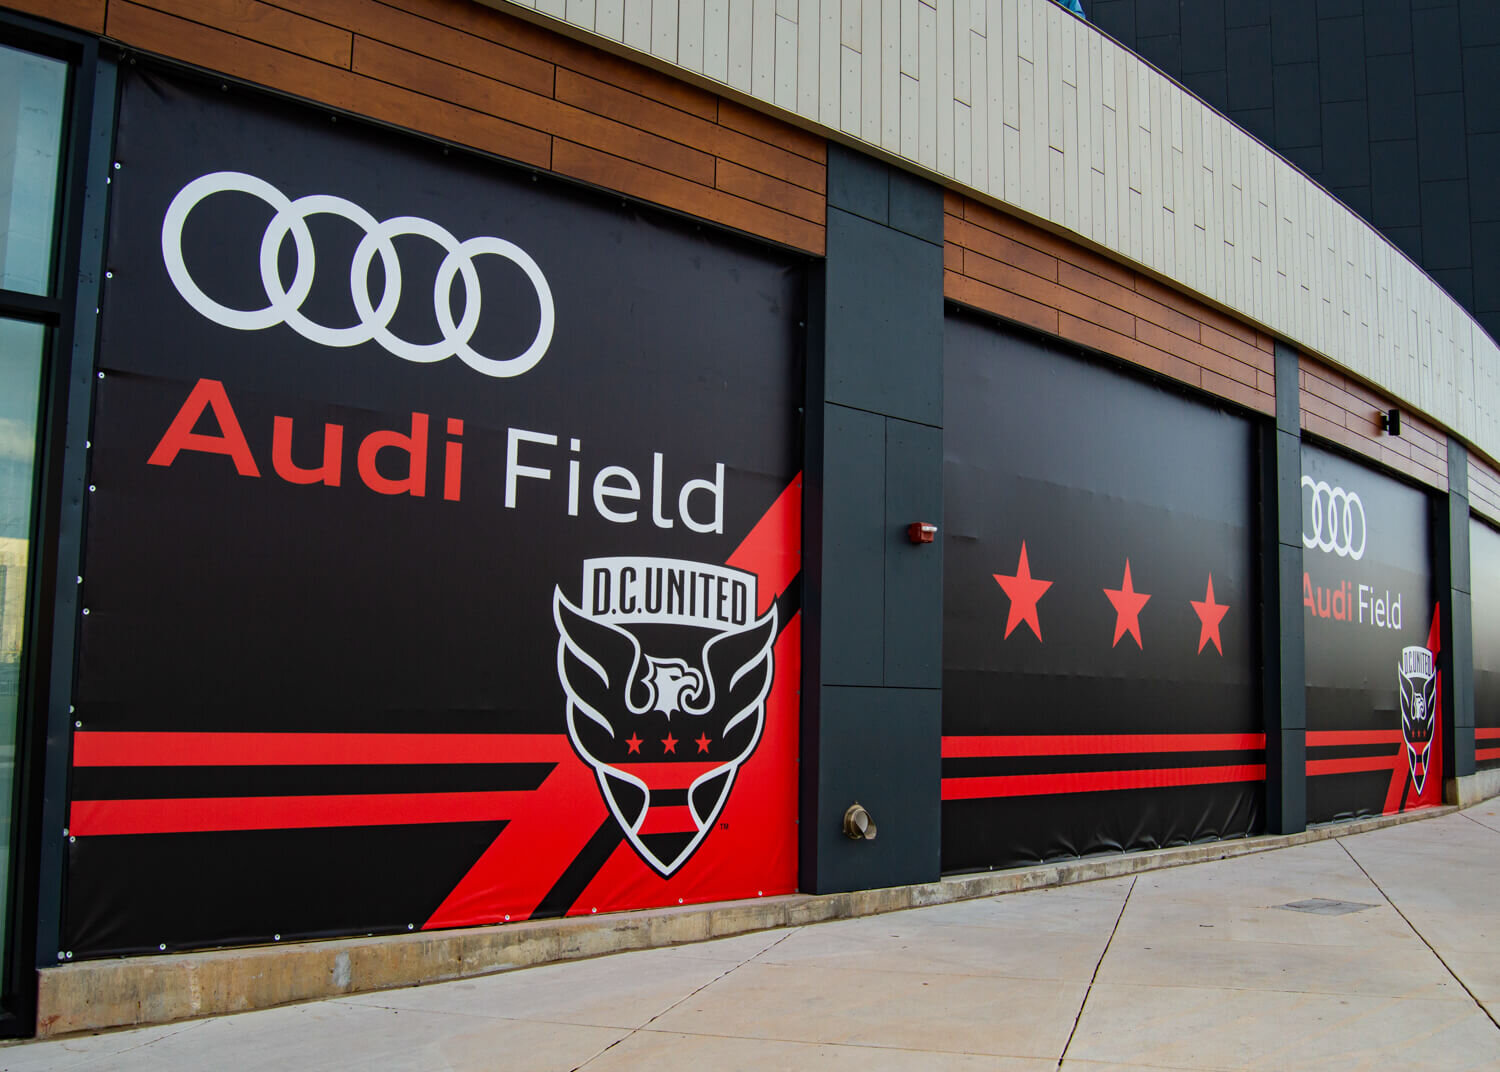 Audi-Field-Washington-DC-United-MLS-Soccer-Stadium-crvnka-Photography-4.JPG